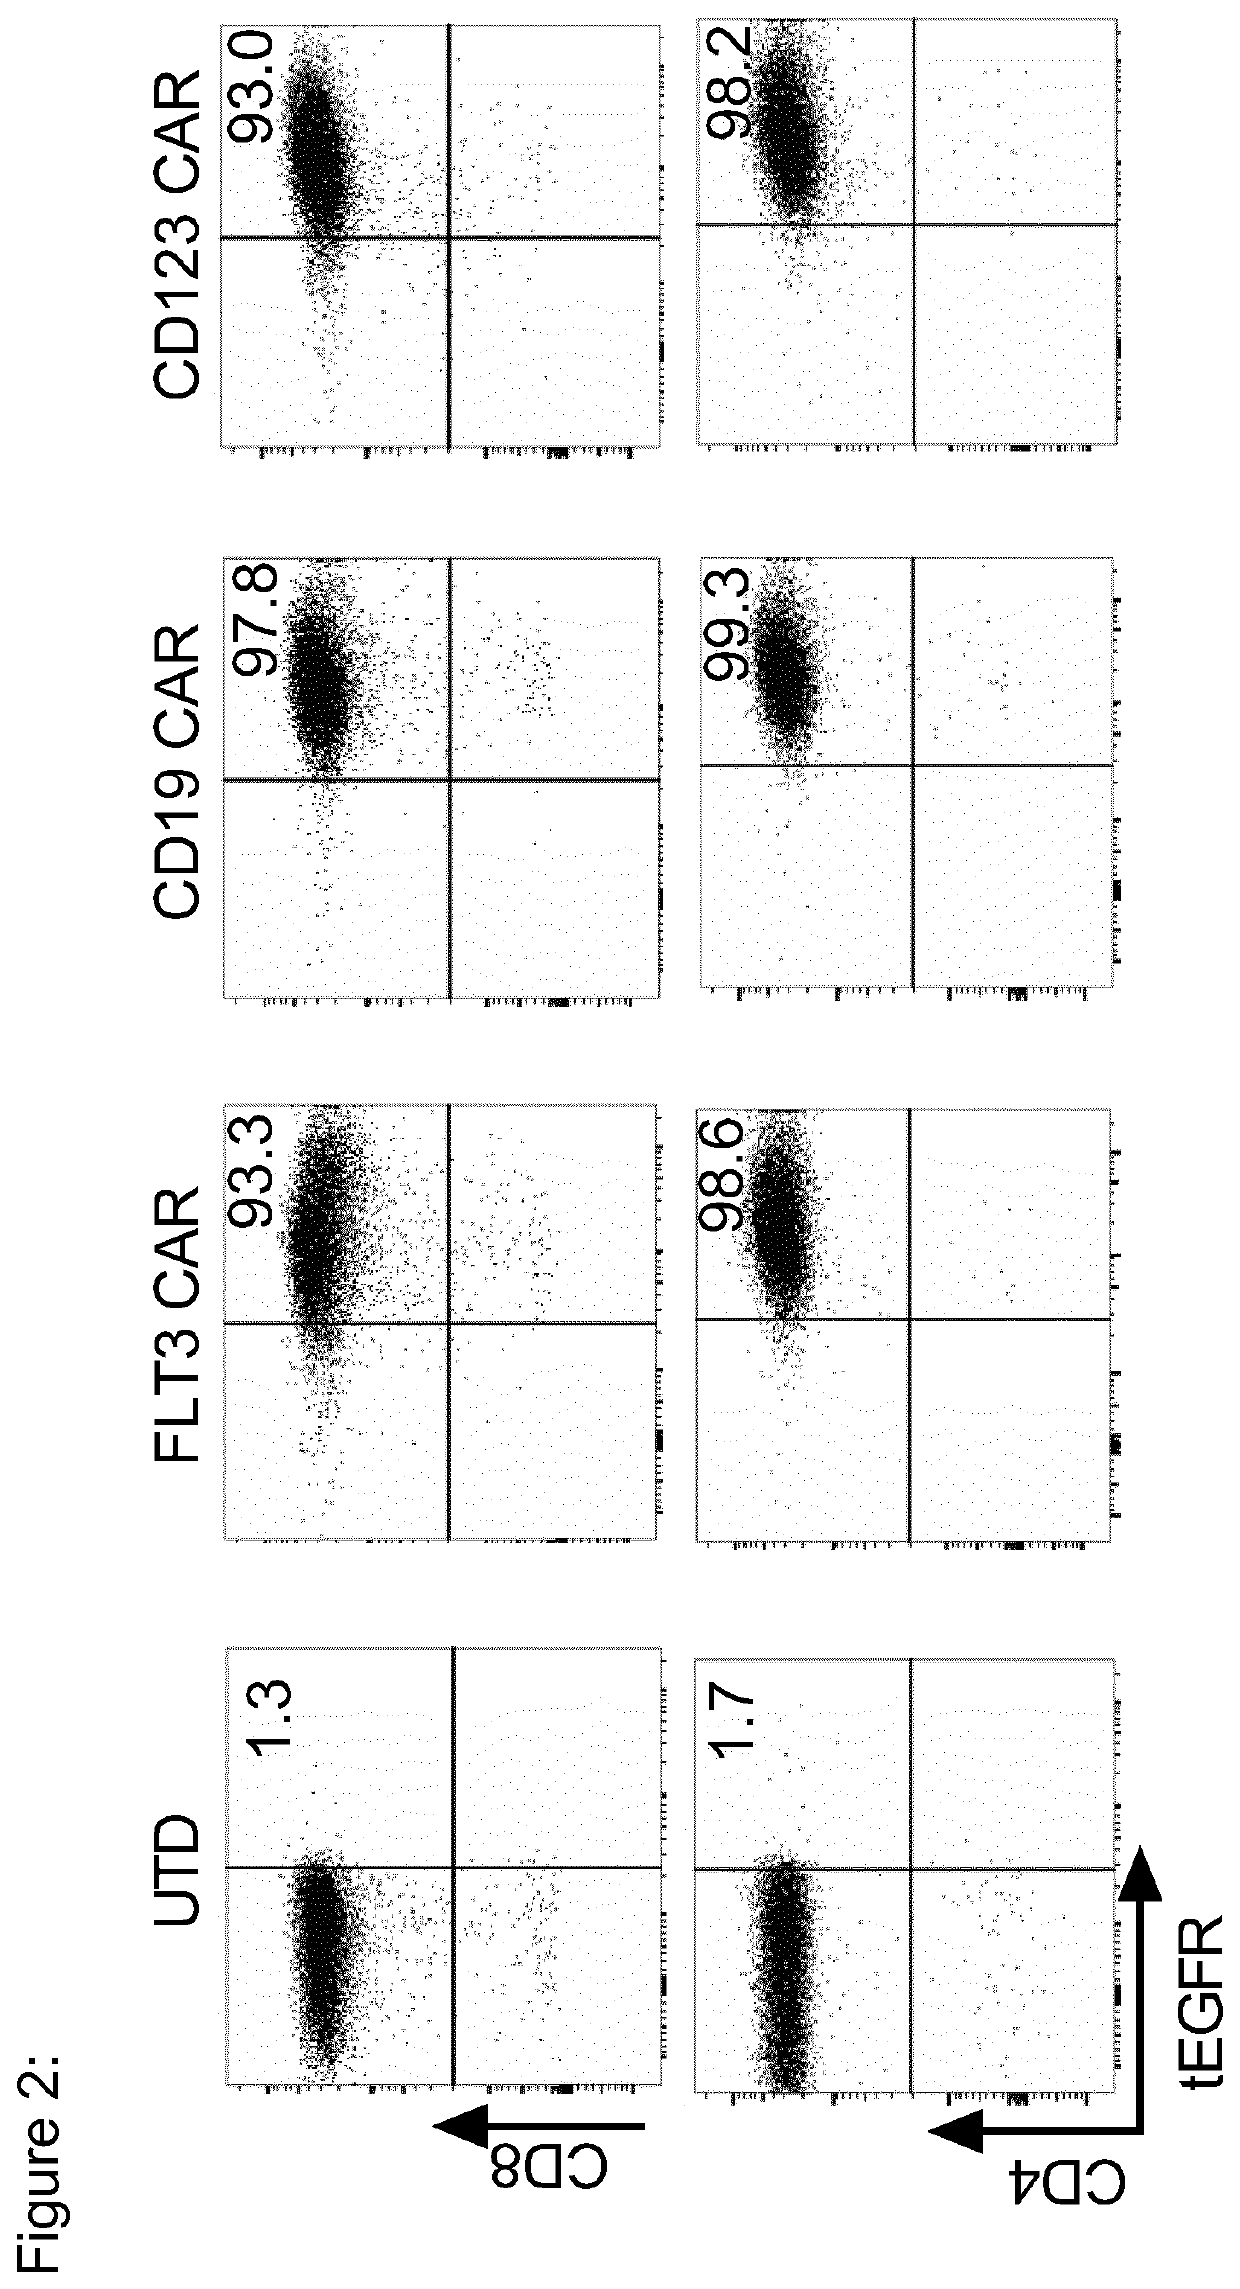 Use of flt3 car-t cells and flt3 inhibitors to treat acute myeloid leukemia